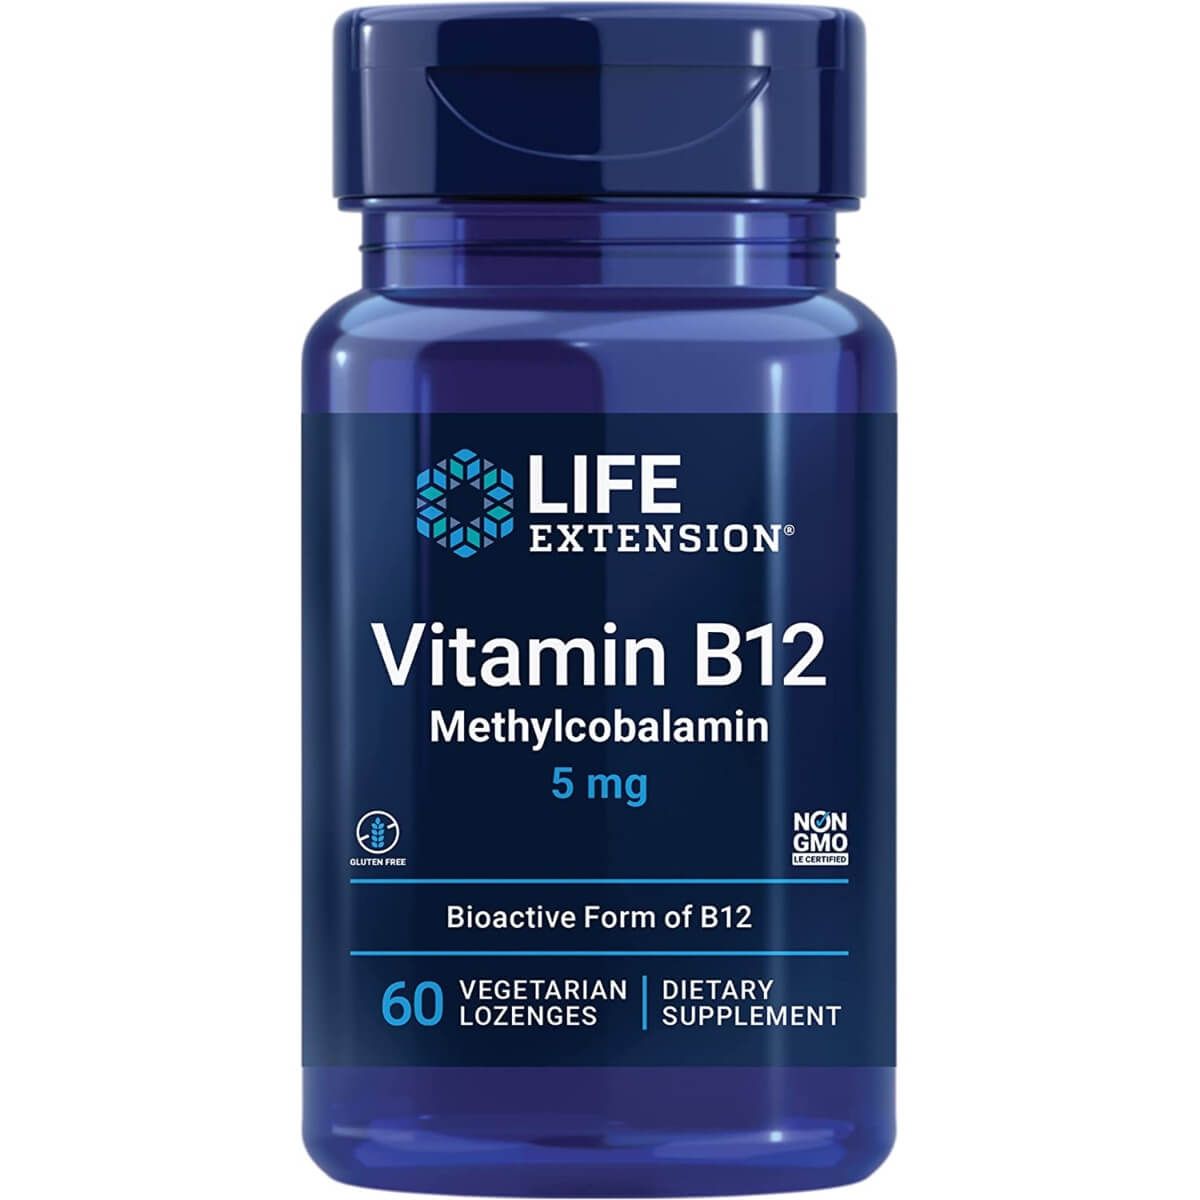 Photos - Vitamins & Minerals Life Extension Vitamin B12 Methylcobalamin 5 mg 60 Vegetarian Lozenges PBW 